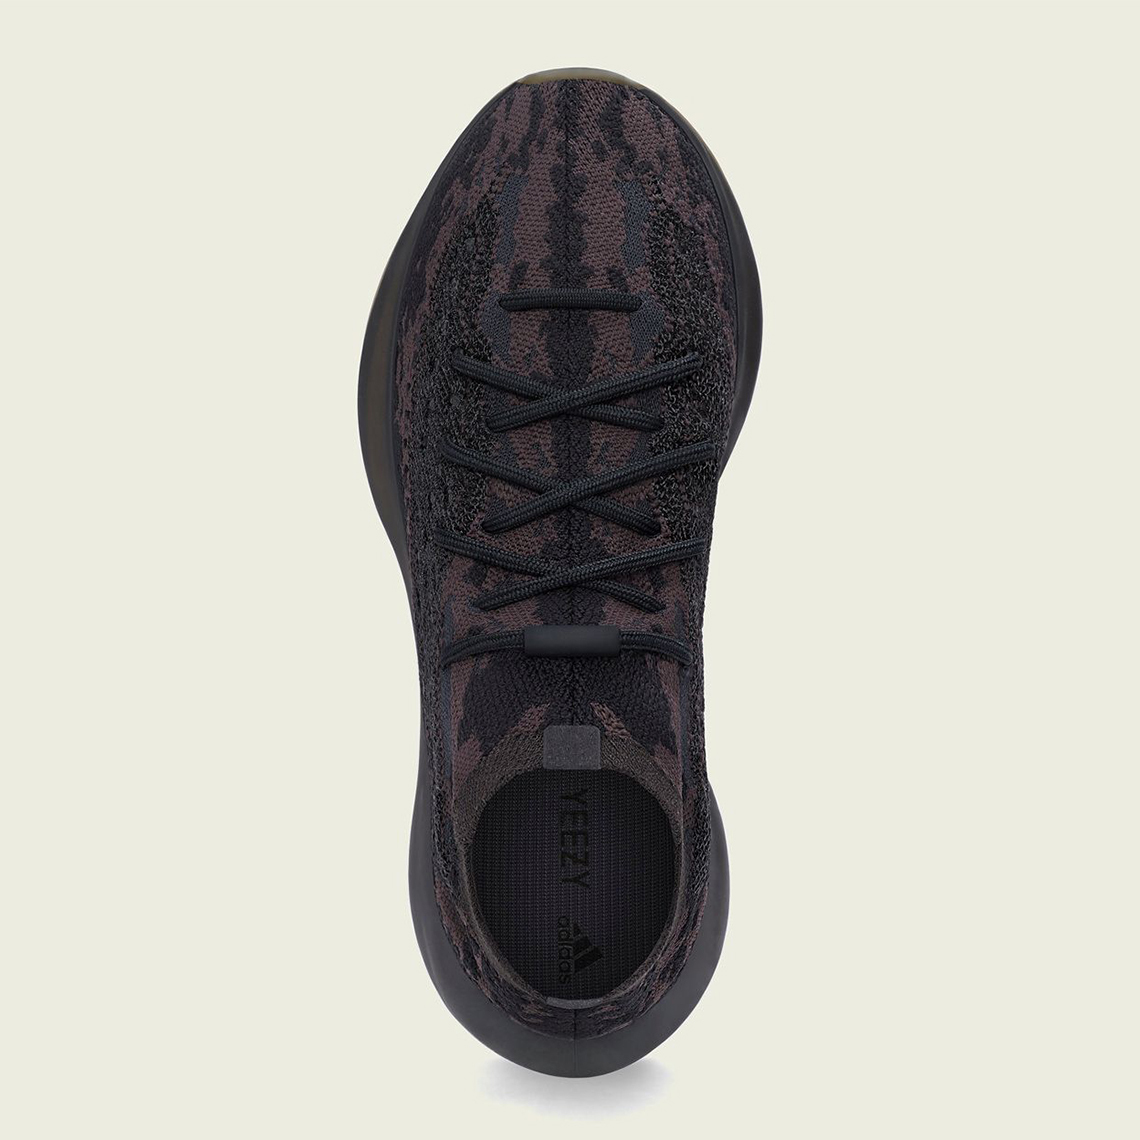 Adidas Yeezy Boost 380 Onyx Fz1270 Release Reminder Sneakernews Com